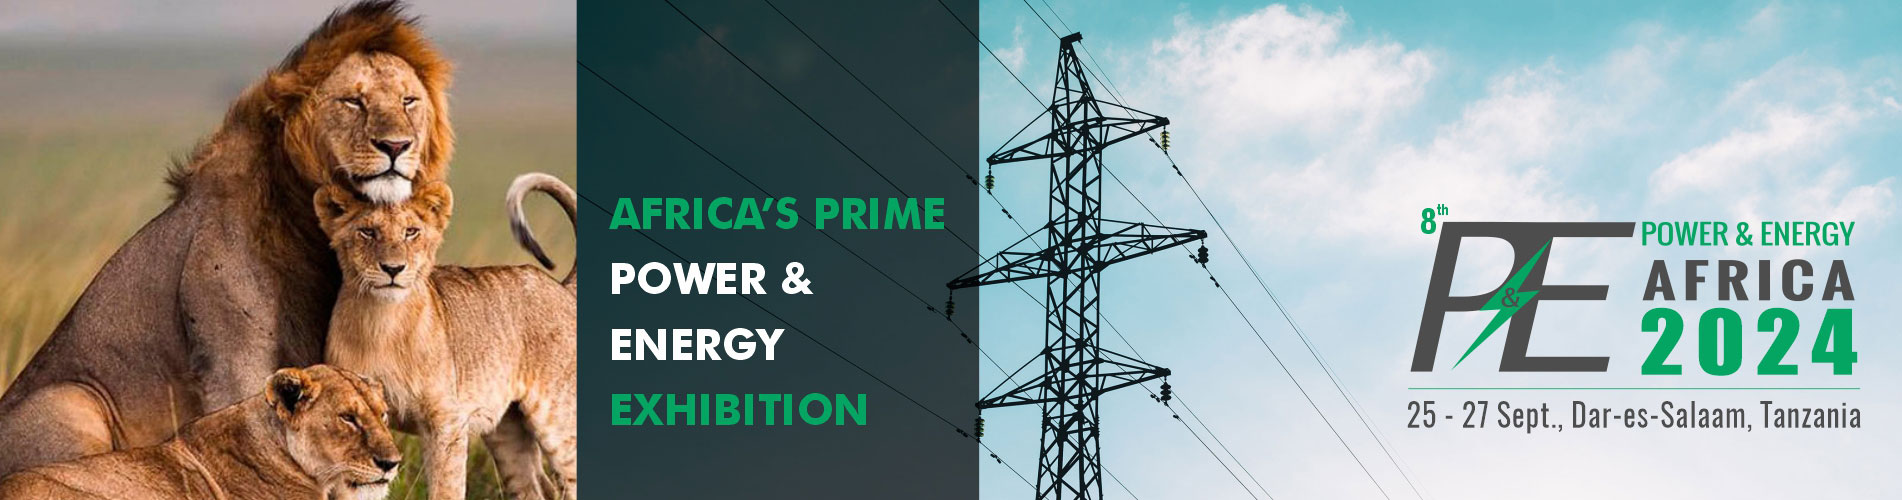 POWER & ENERGY Tanzania 2024 - International POWER & ENERGY Show Africa